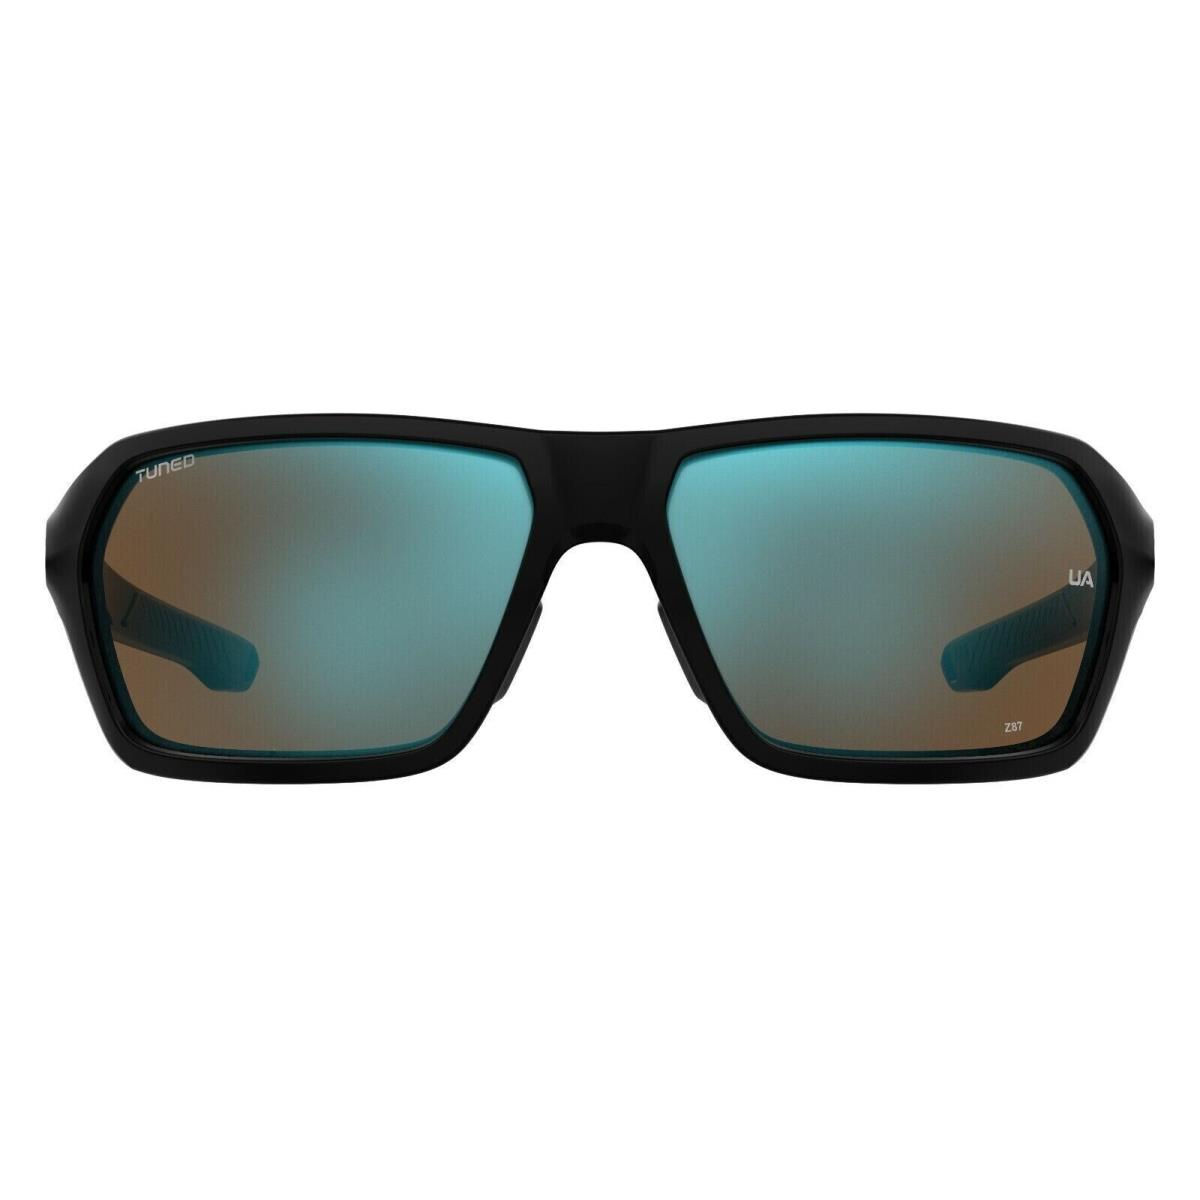 Under Armour Men`s Square Sunglasses Recon 0807/W1 Black/blue 64mm - Frame: Black, Lens: BLUE MULTILAYER